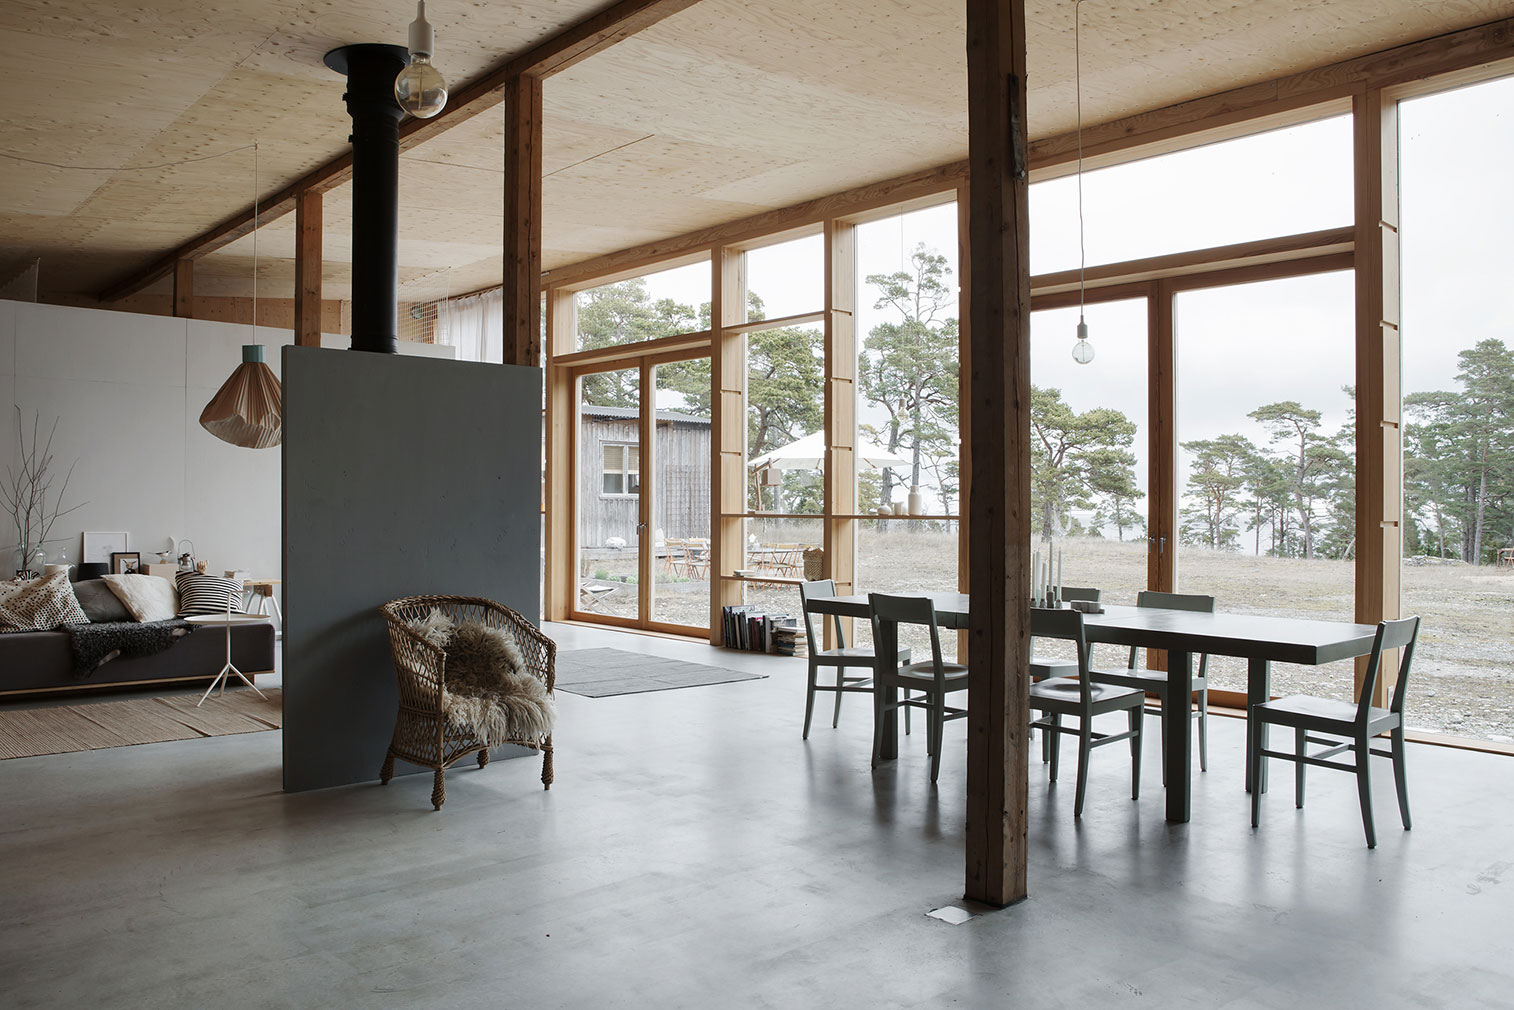 Imberg Arkitekter holiday home on Gotland